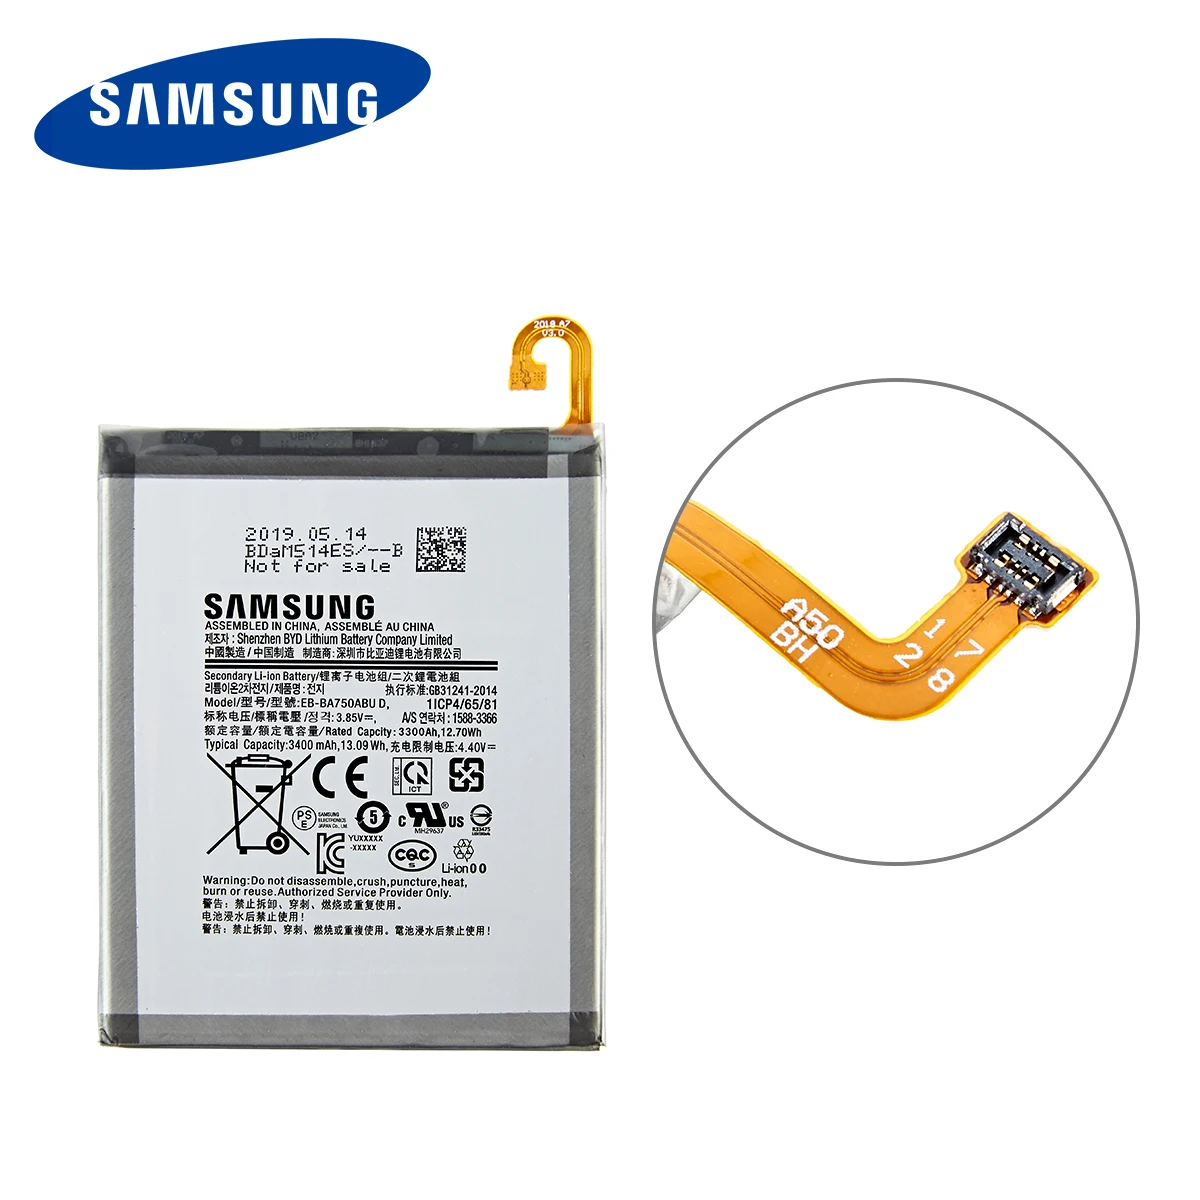 SAMSUNG Orginal EB-BA750ABU 3400mAh batteri Til SAMSUNG Galaxy A7 2018 version A730x A750 SM-A730x A10 SM-A750F +Værktøjer 4